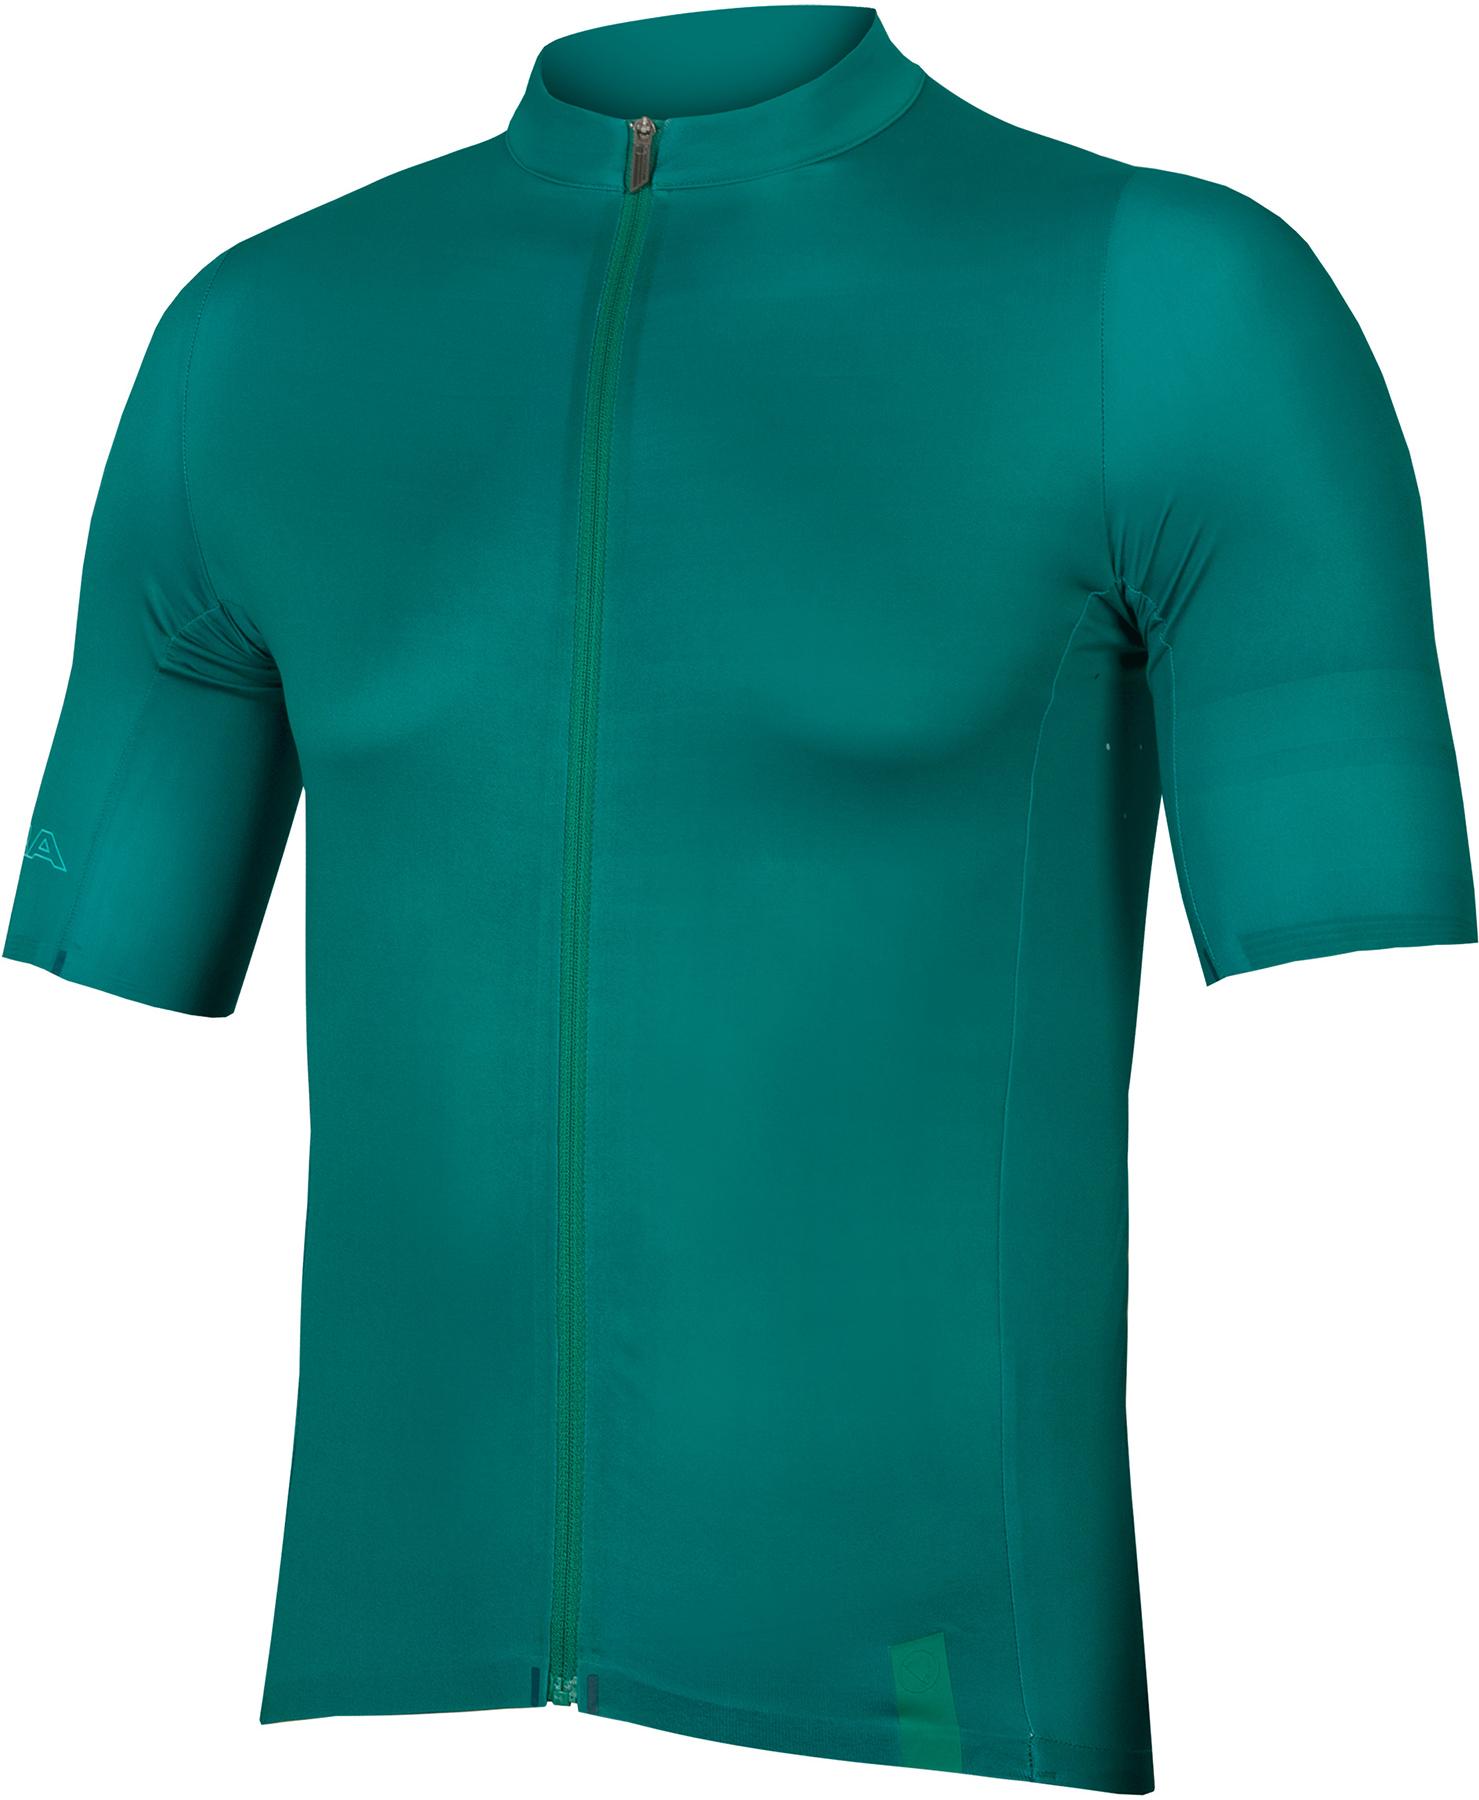 Endura Pro Sl Short Sleeve Jersey  Emerald Green